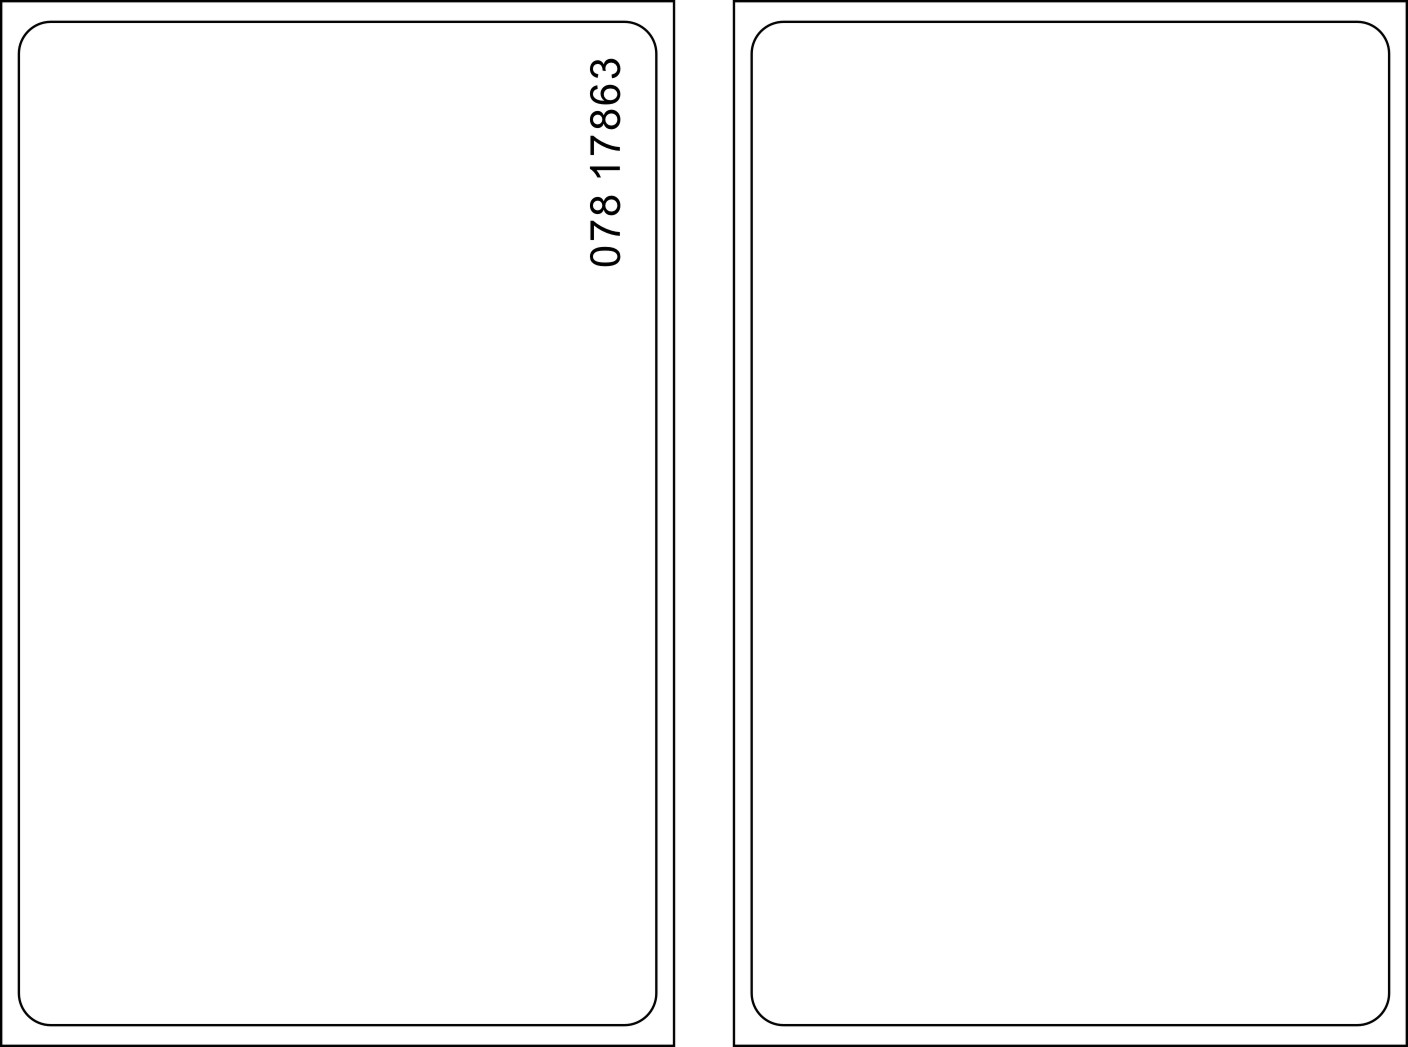 LIONBEAM | Prox Card Printable
HID 25Pack